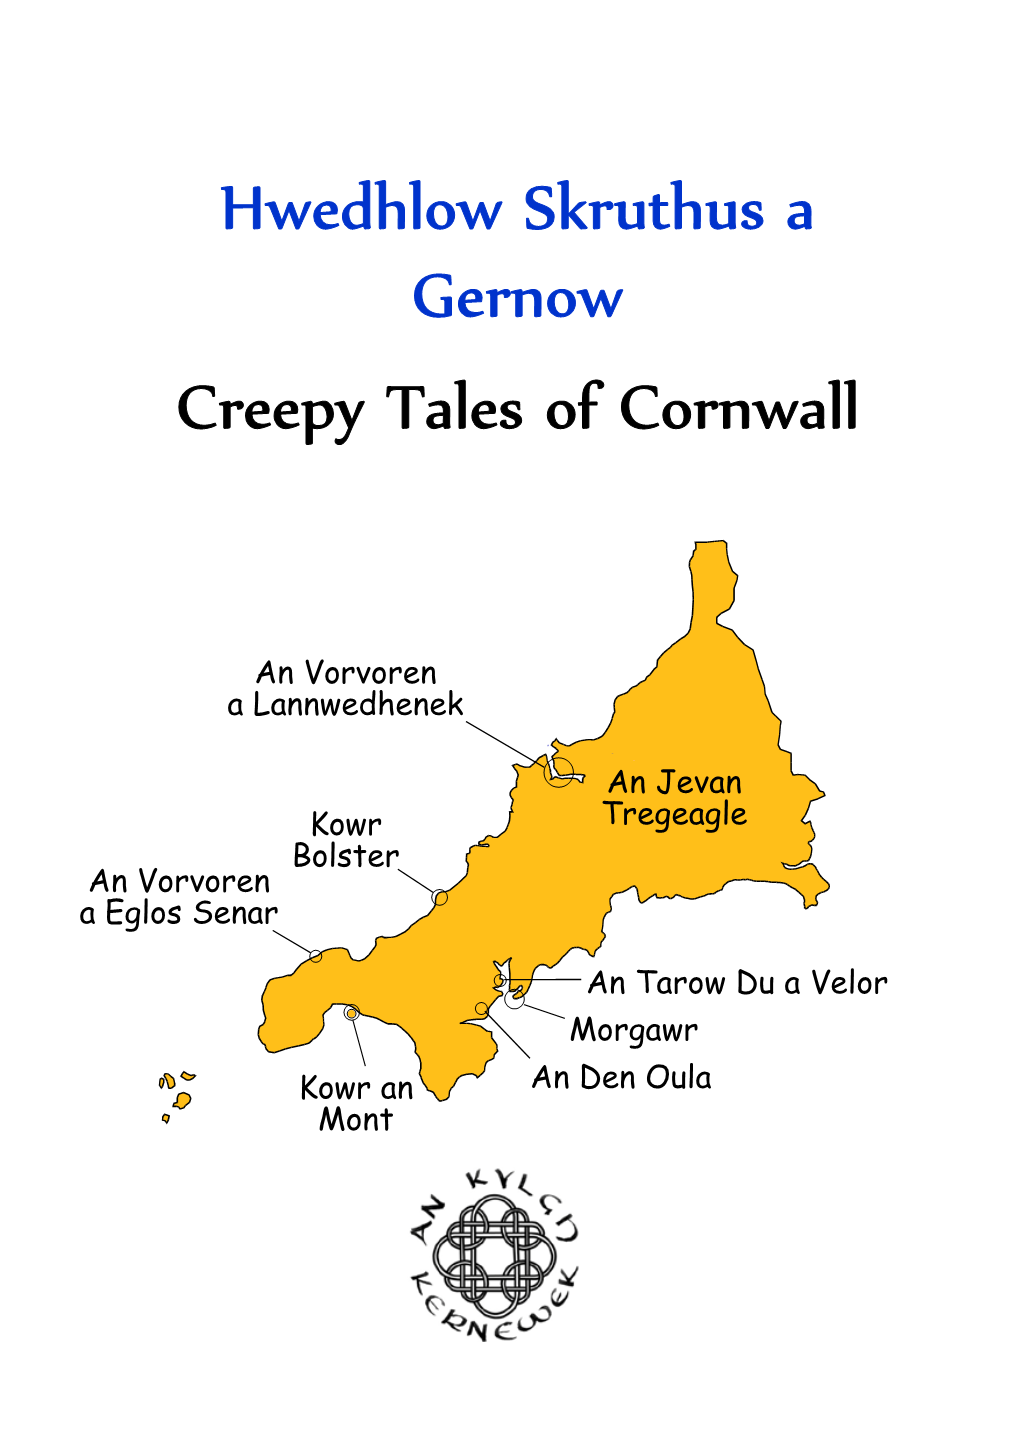 Hwedhlow Skruthus a Gernow Creepy Tales of Cornwall